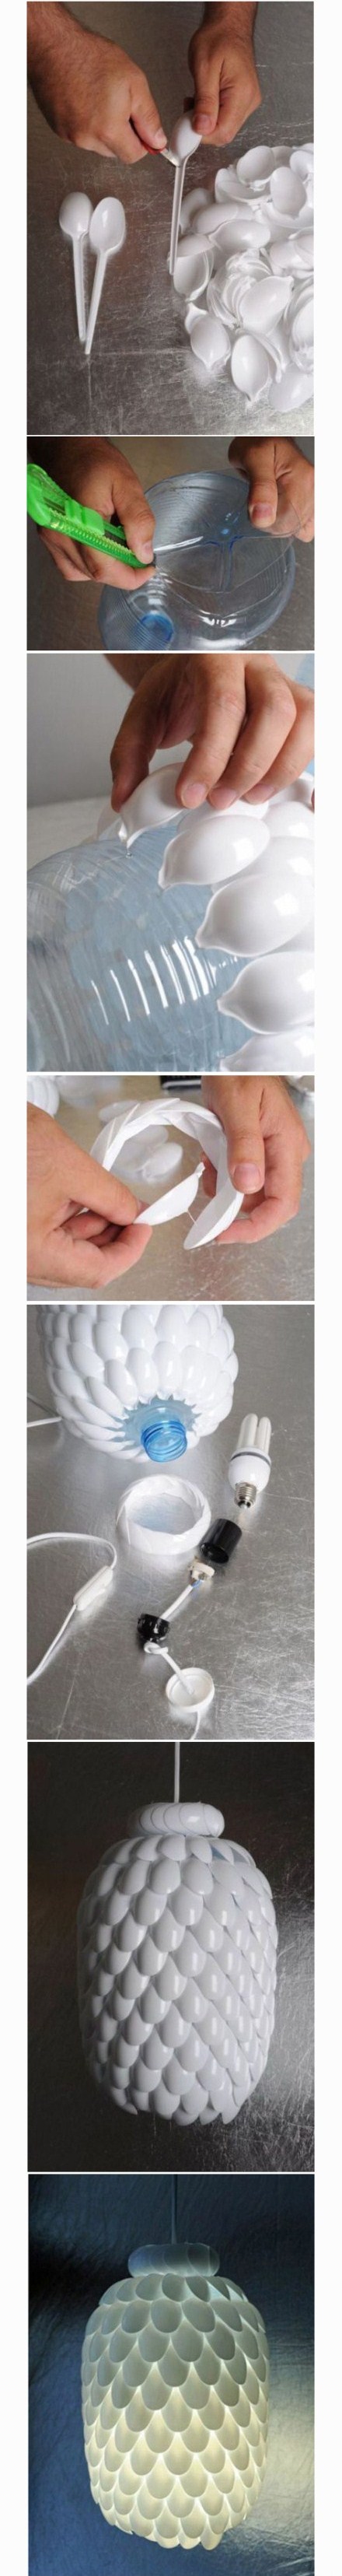 【DIY一个漂亮的吊灯~】用1堆白色塑料勺子+1个大号矿泉水瓶+白炽灯泡+带线开关等材料制作的吊灯，造型看上去还不错~手工很强大~~